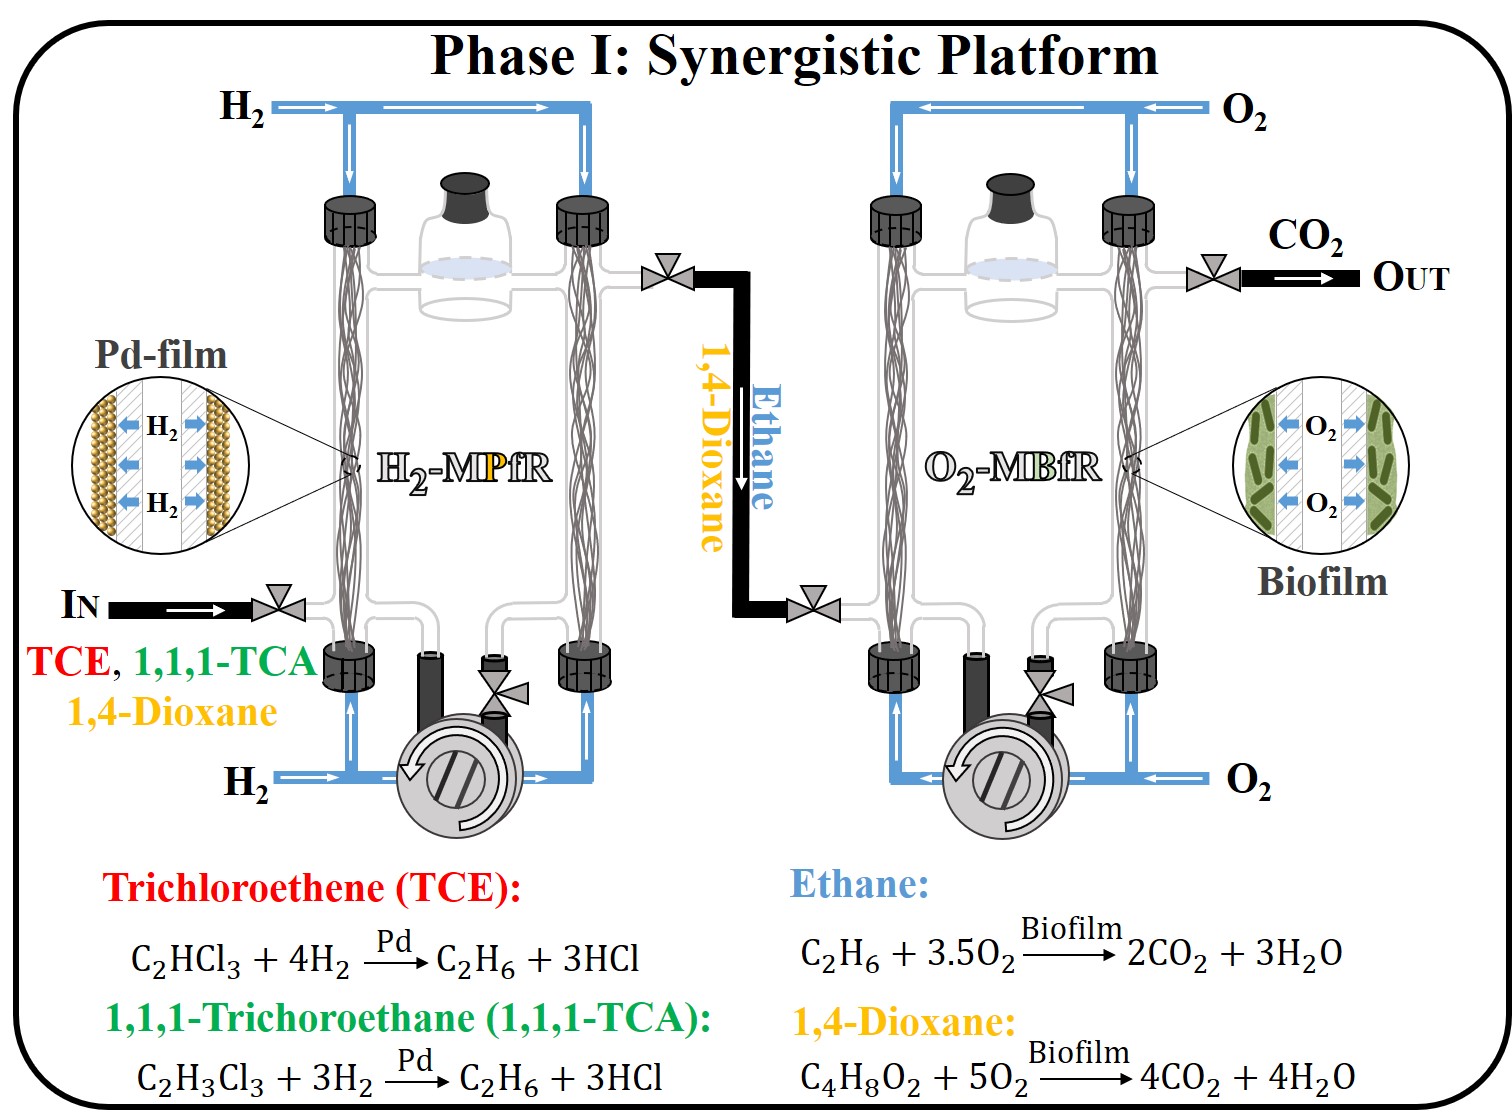 Synergisticc Platform